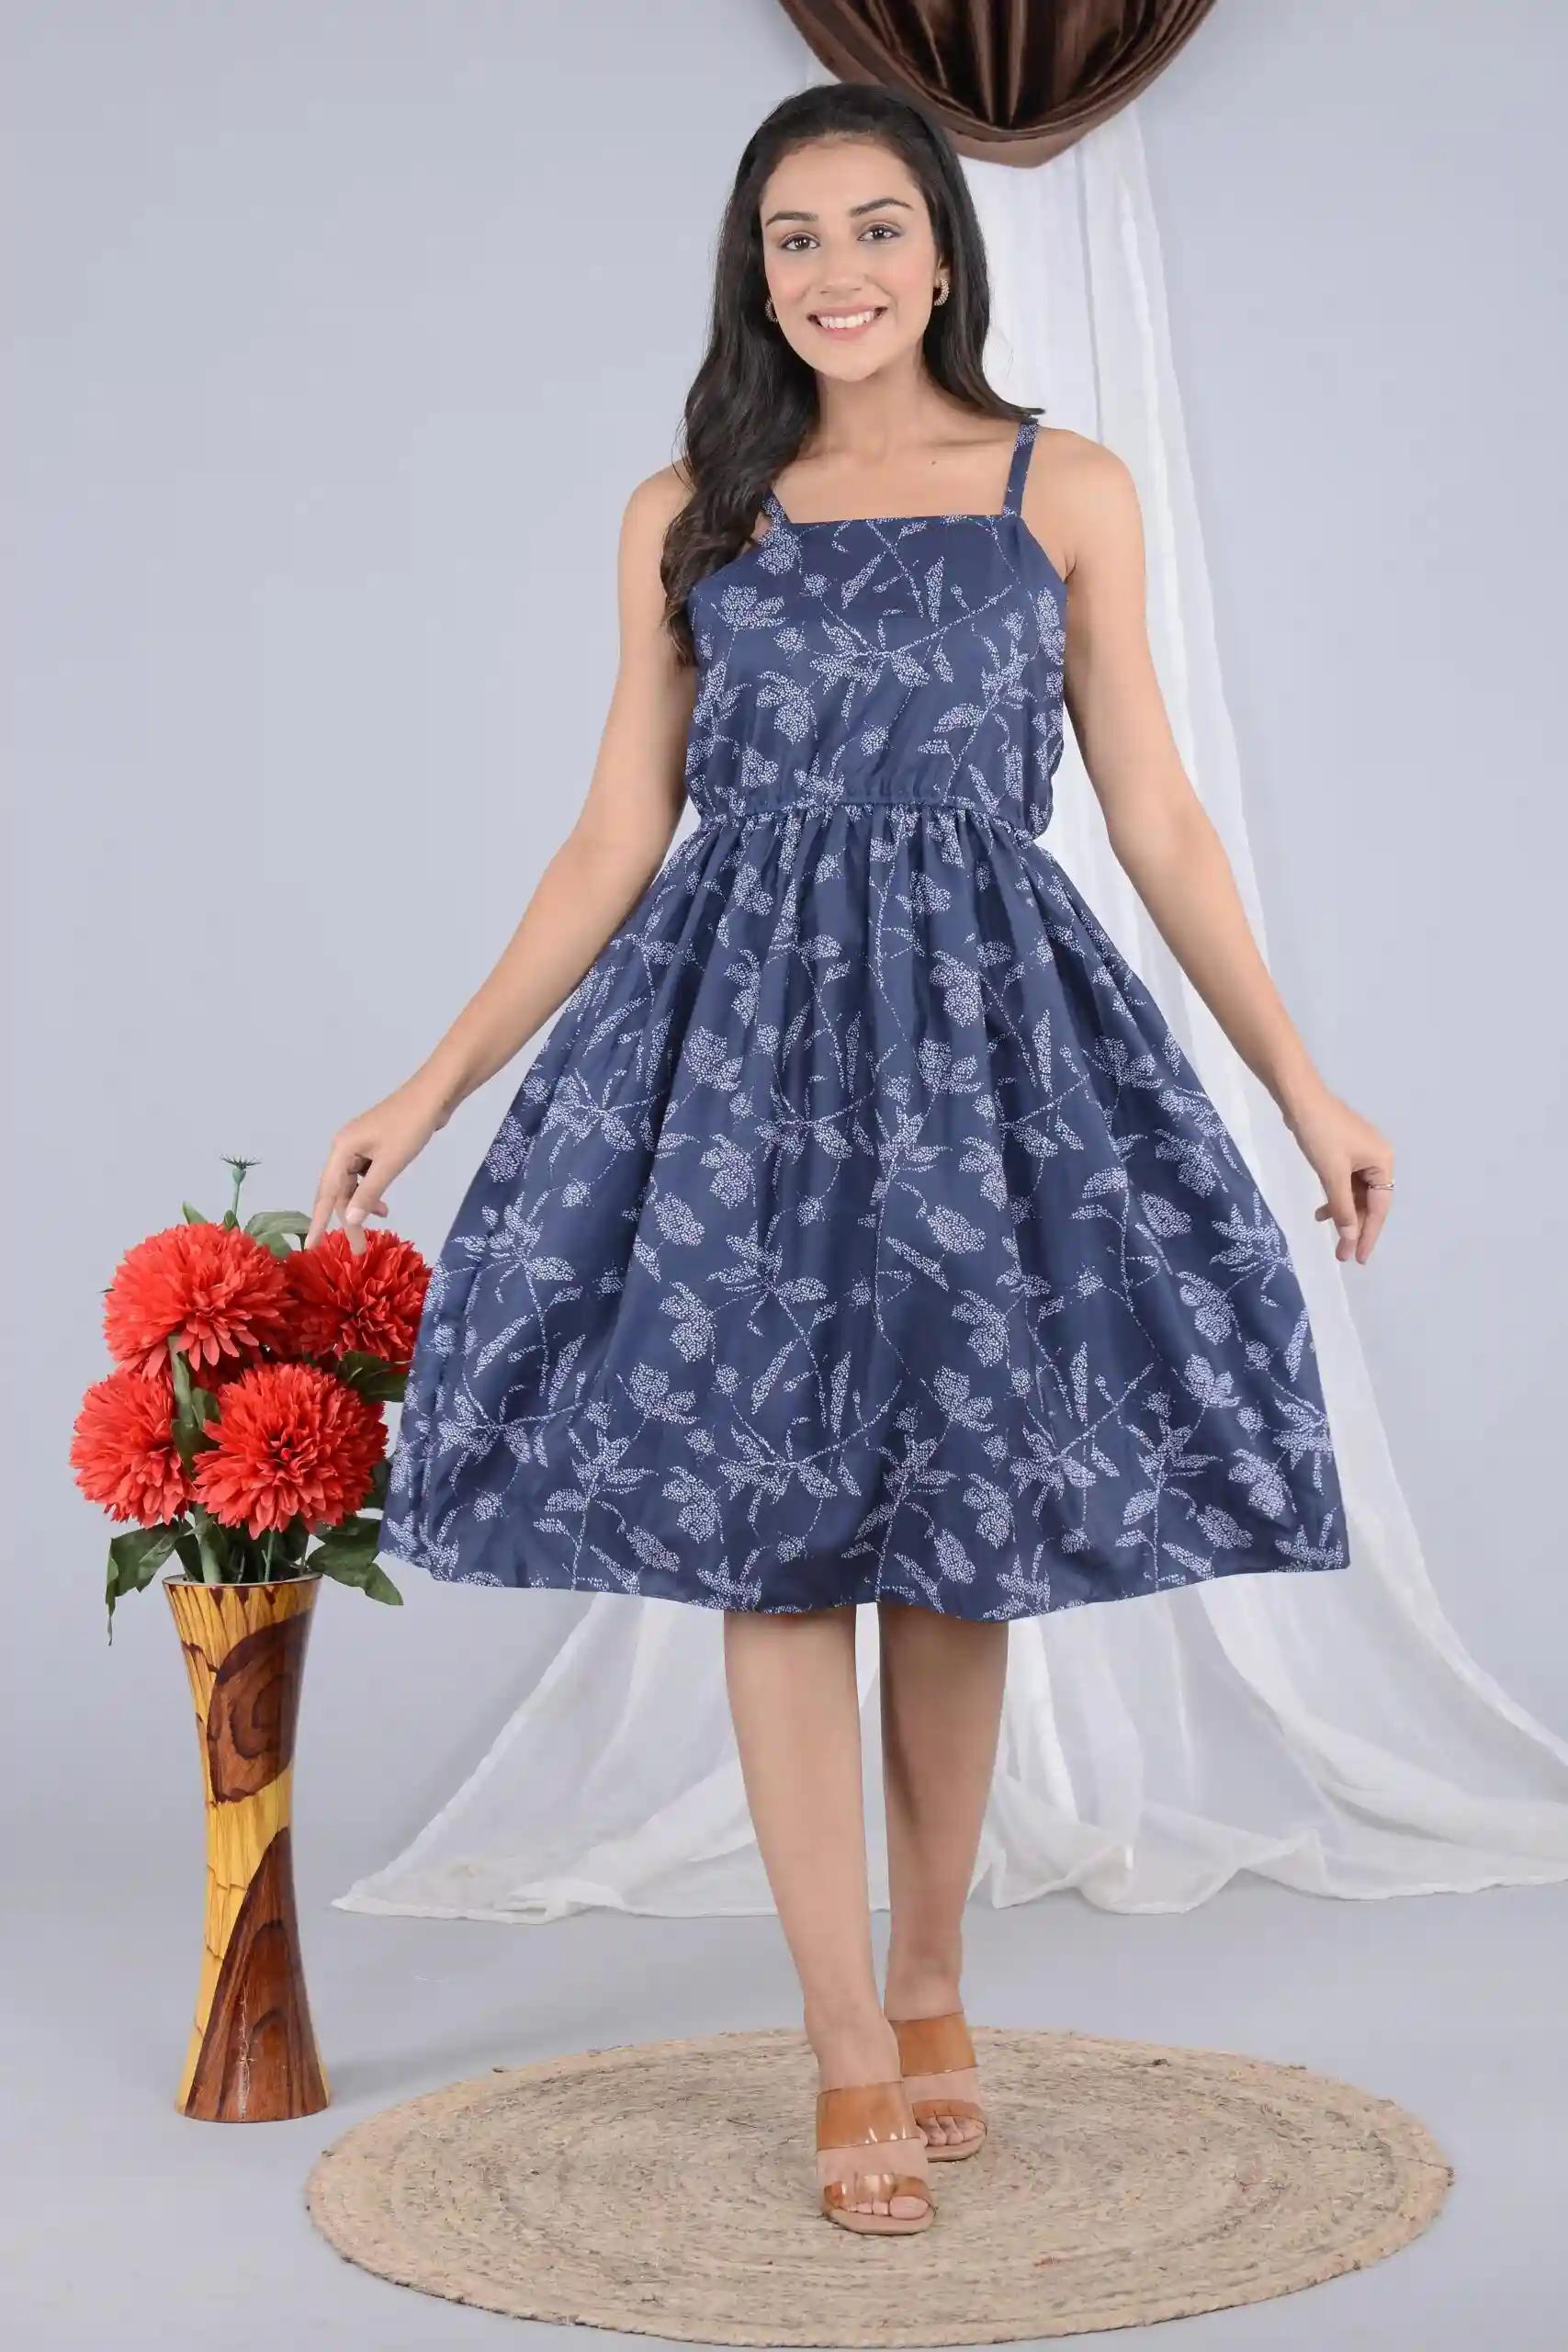 Floral Print Blue Strap Dress for Women - M